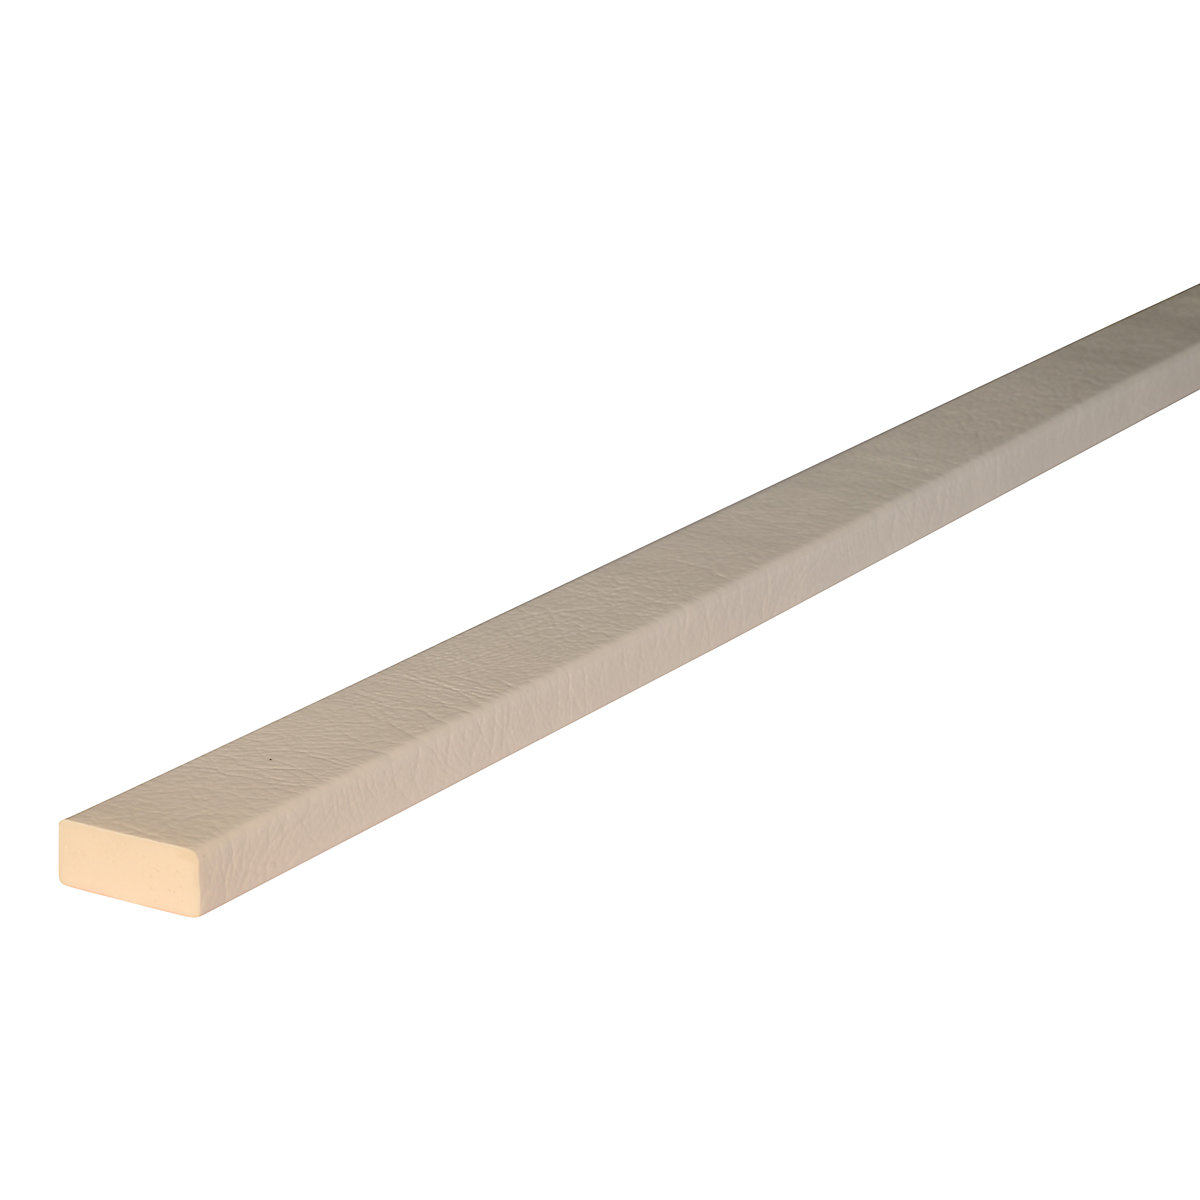 Knuffi®-oppervlaktebescherming – SHG, type D, stuk van 1 m, wit-18